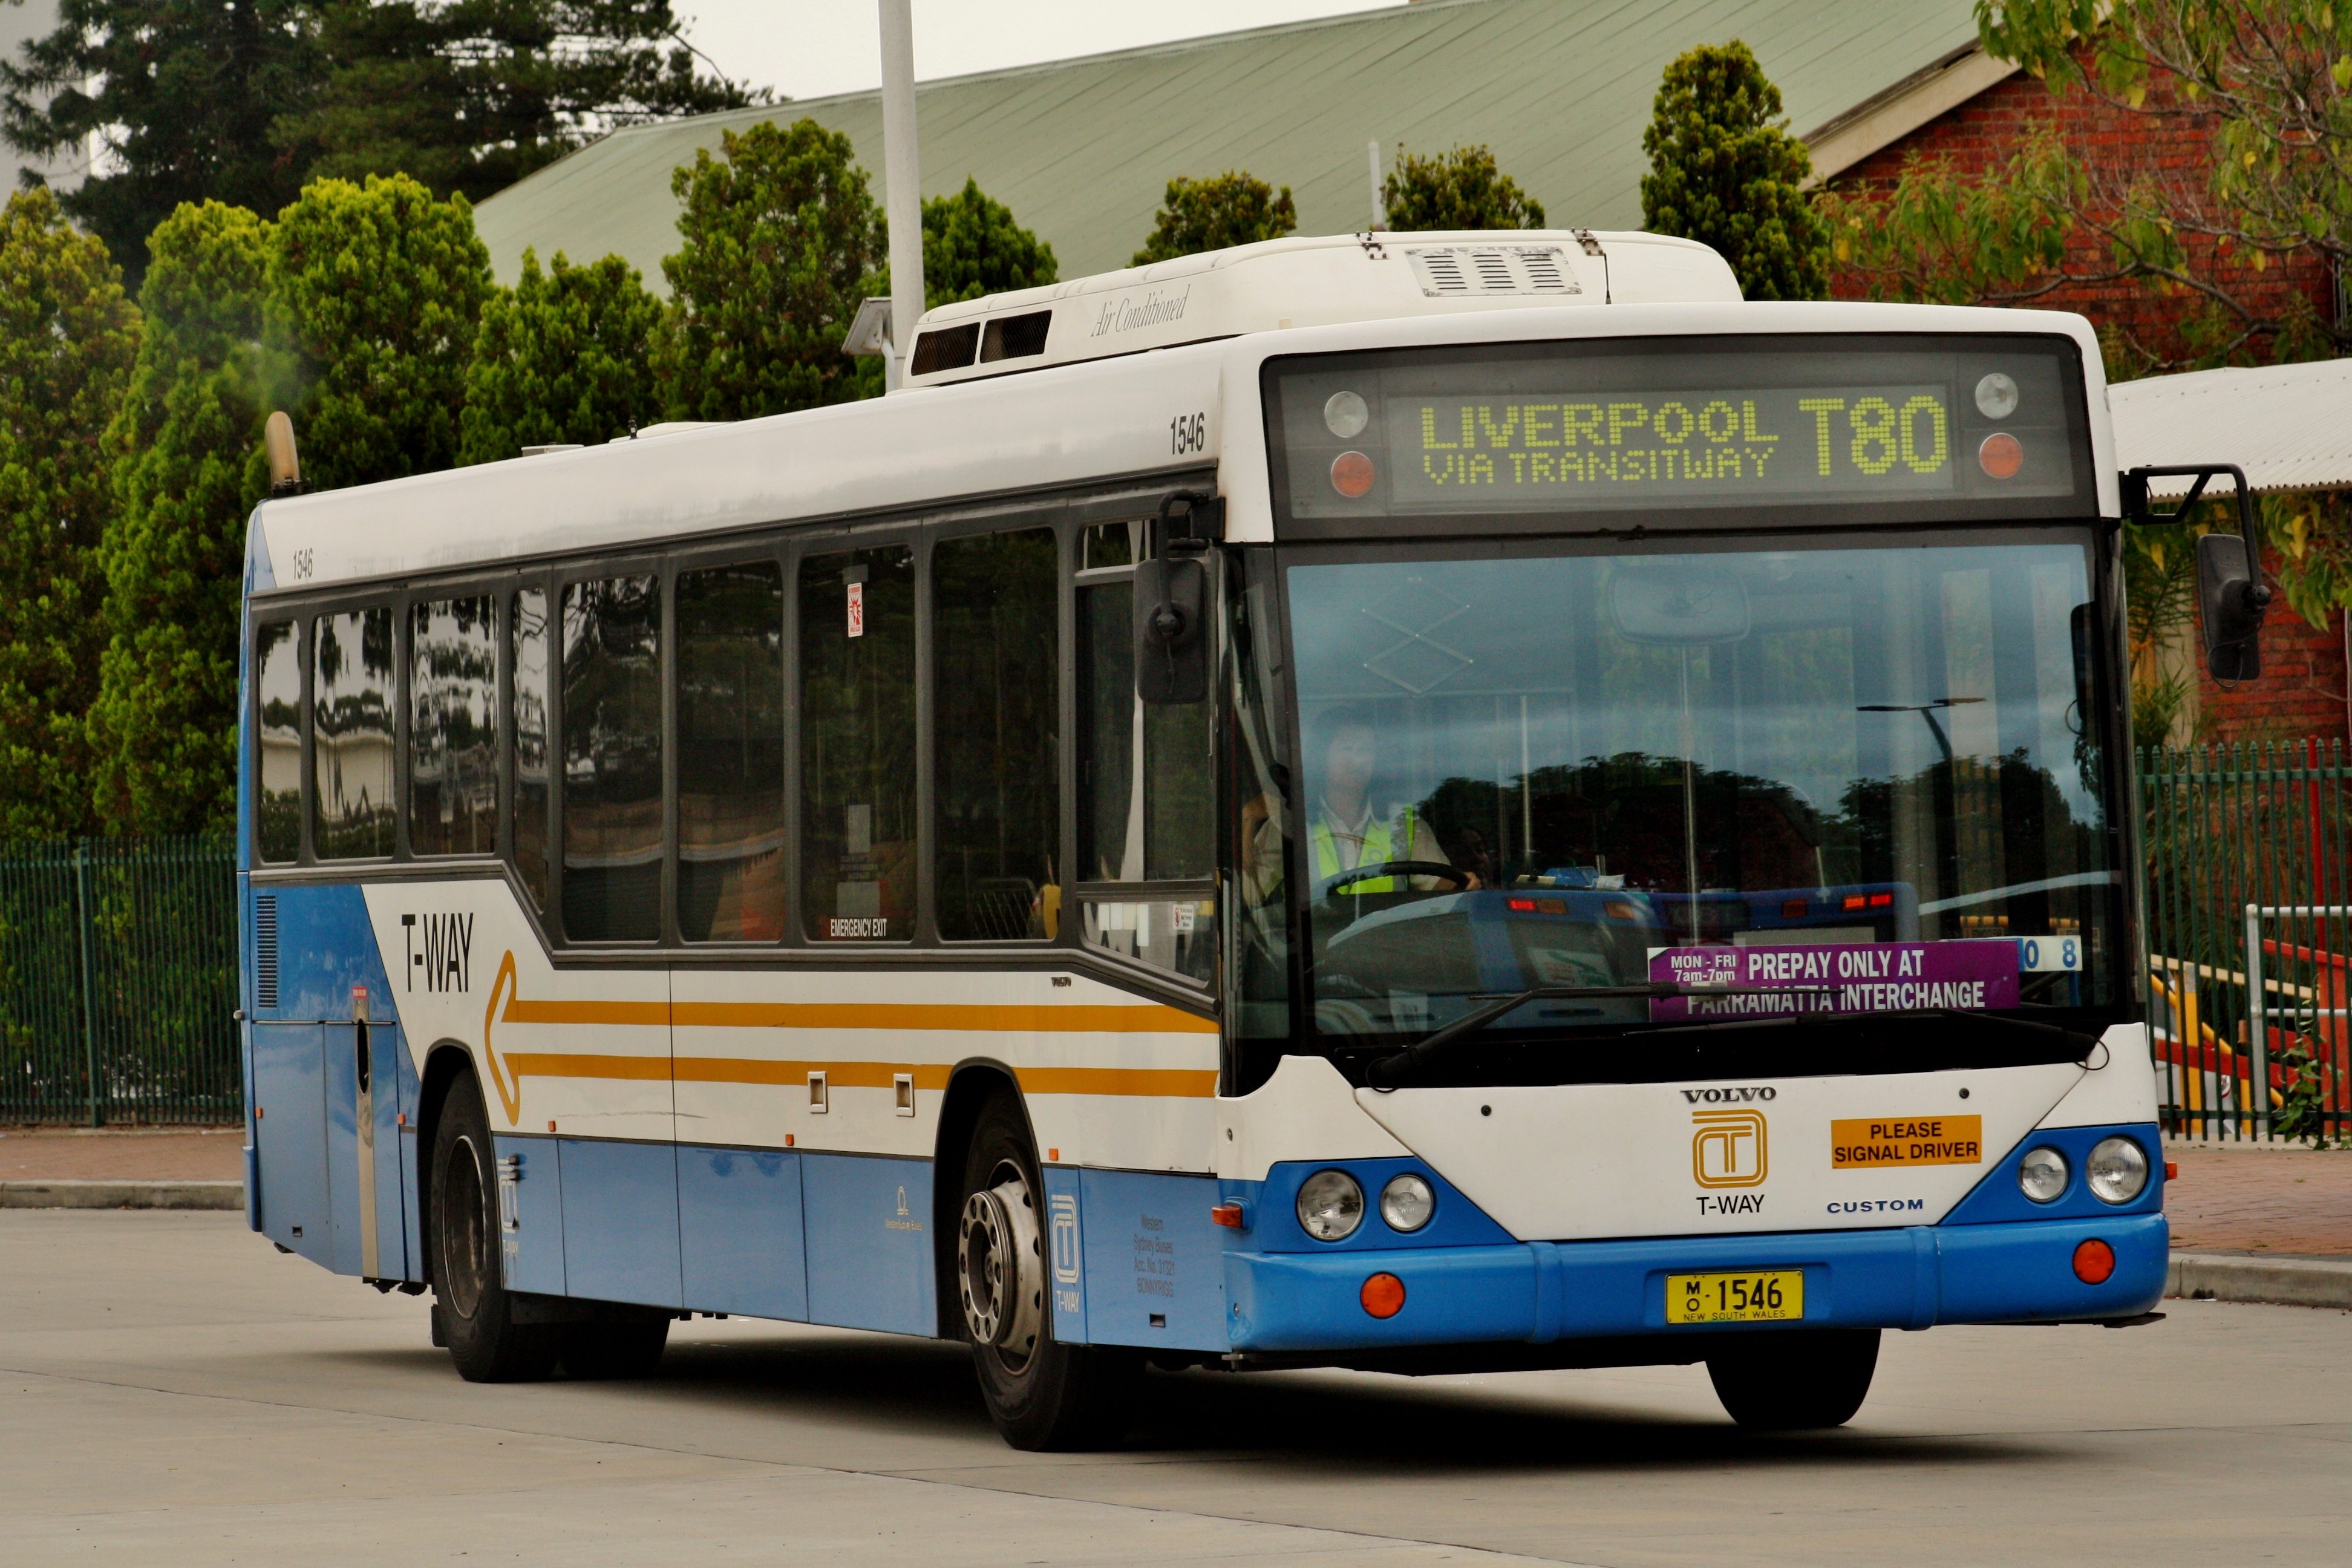 Western Sydney Buses #1546 | Flickr - Photo Sharing!